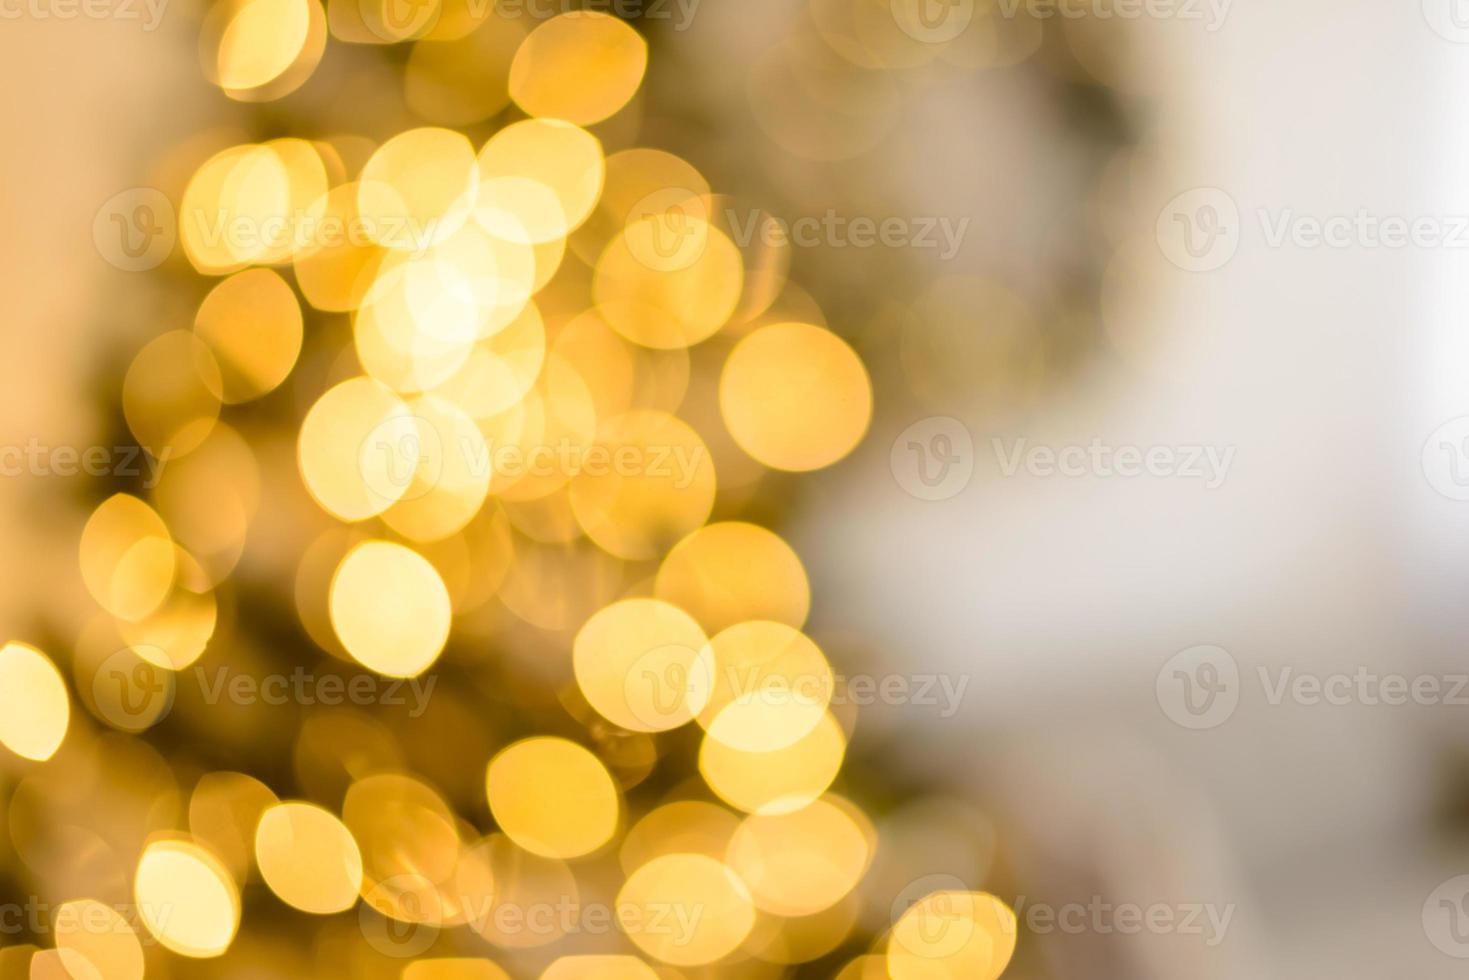 diseño festivo de desenfoque de navidad, luces de guirnaldas desenfocadas foto